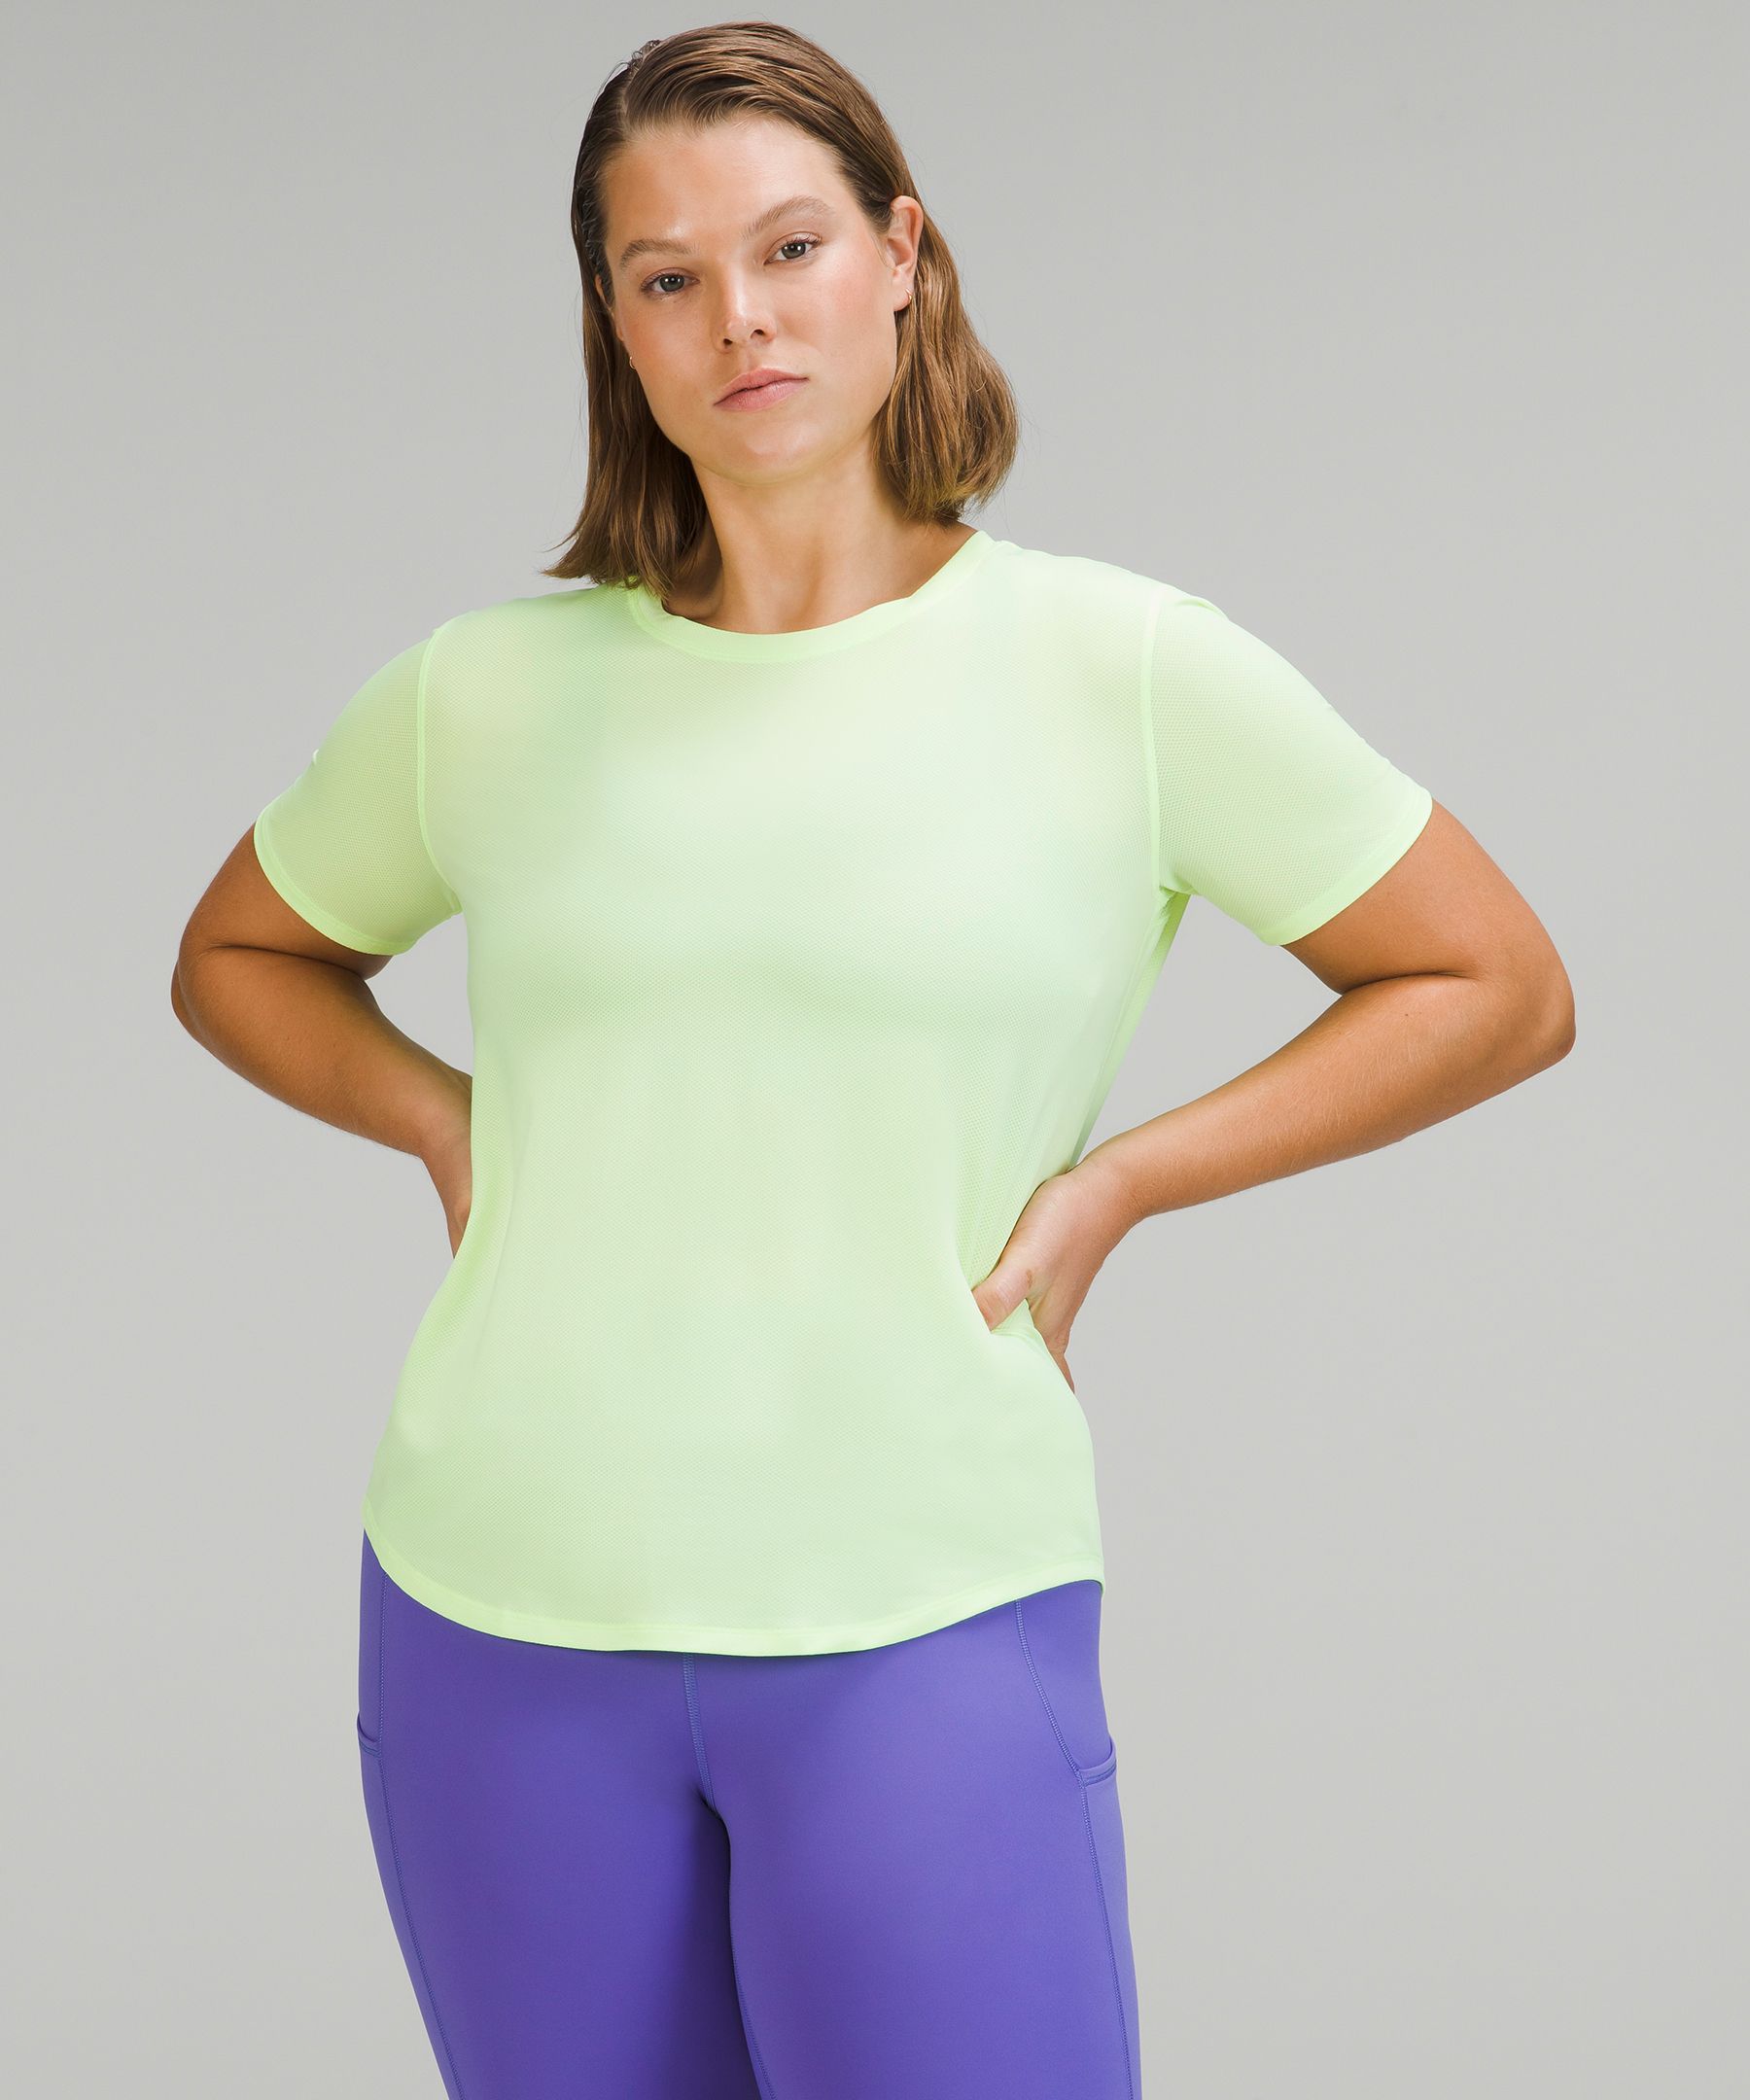 Lululemon High-neck Running And Training T-shirt